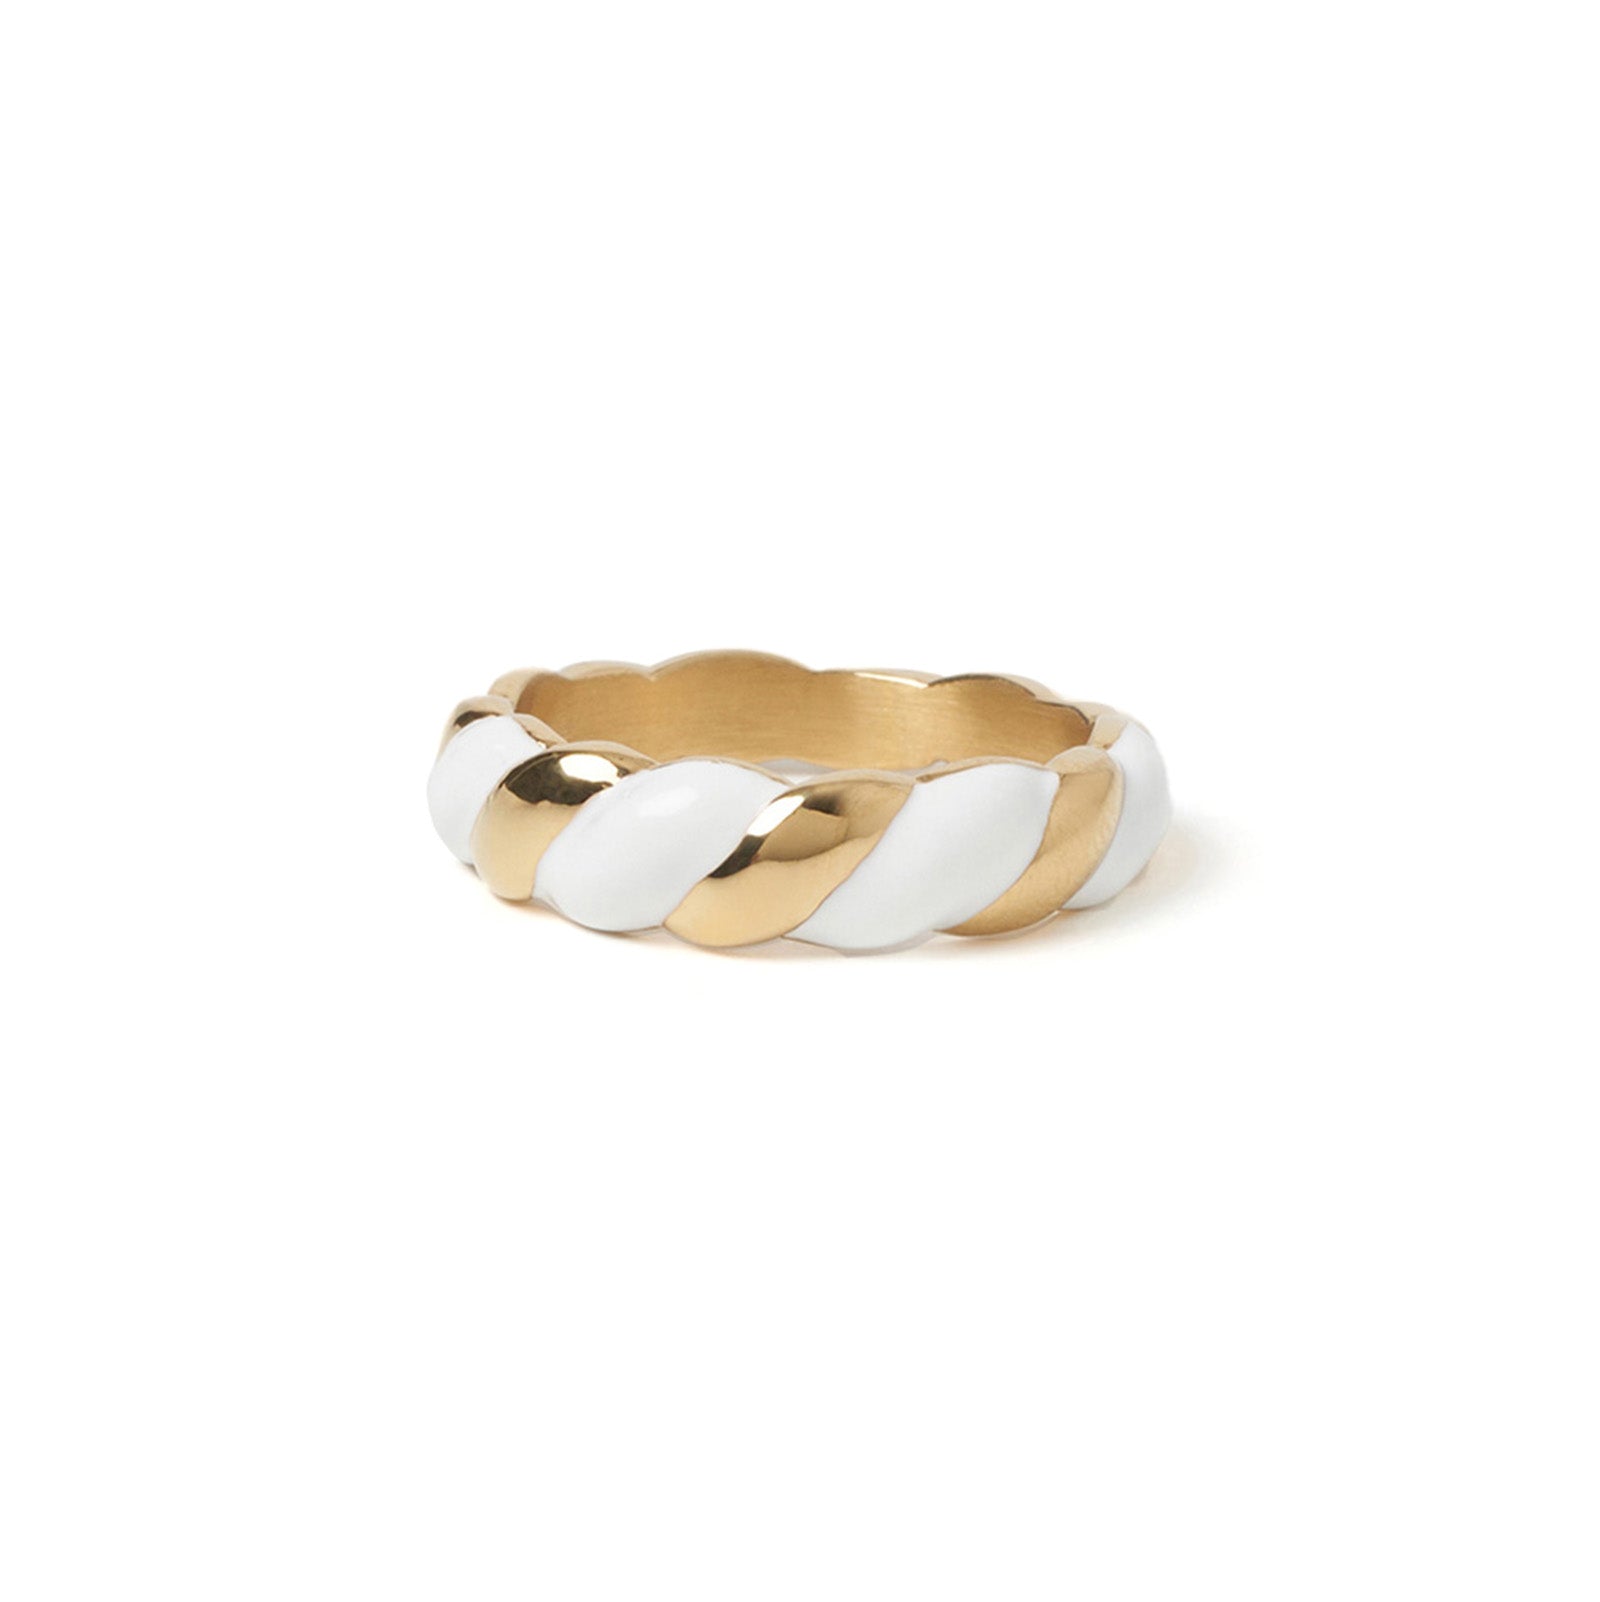 Hudson Gold and Enamel Ring